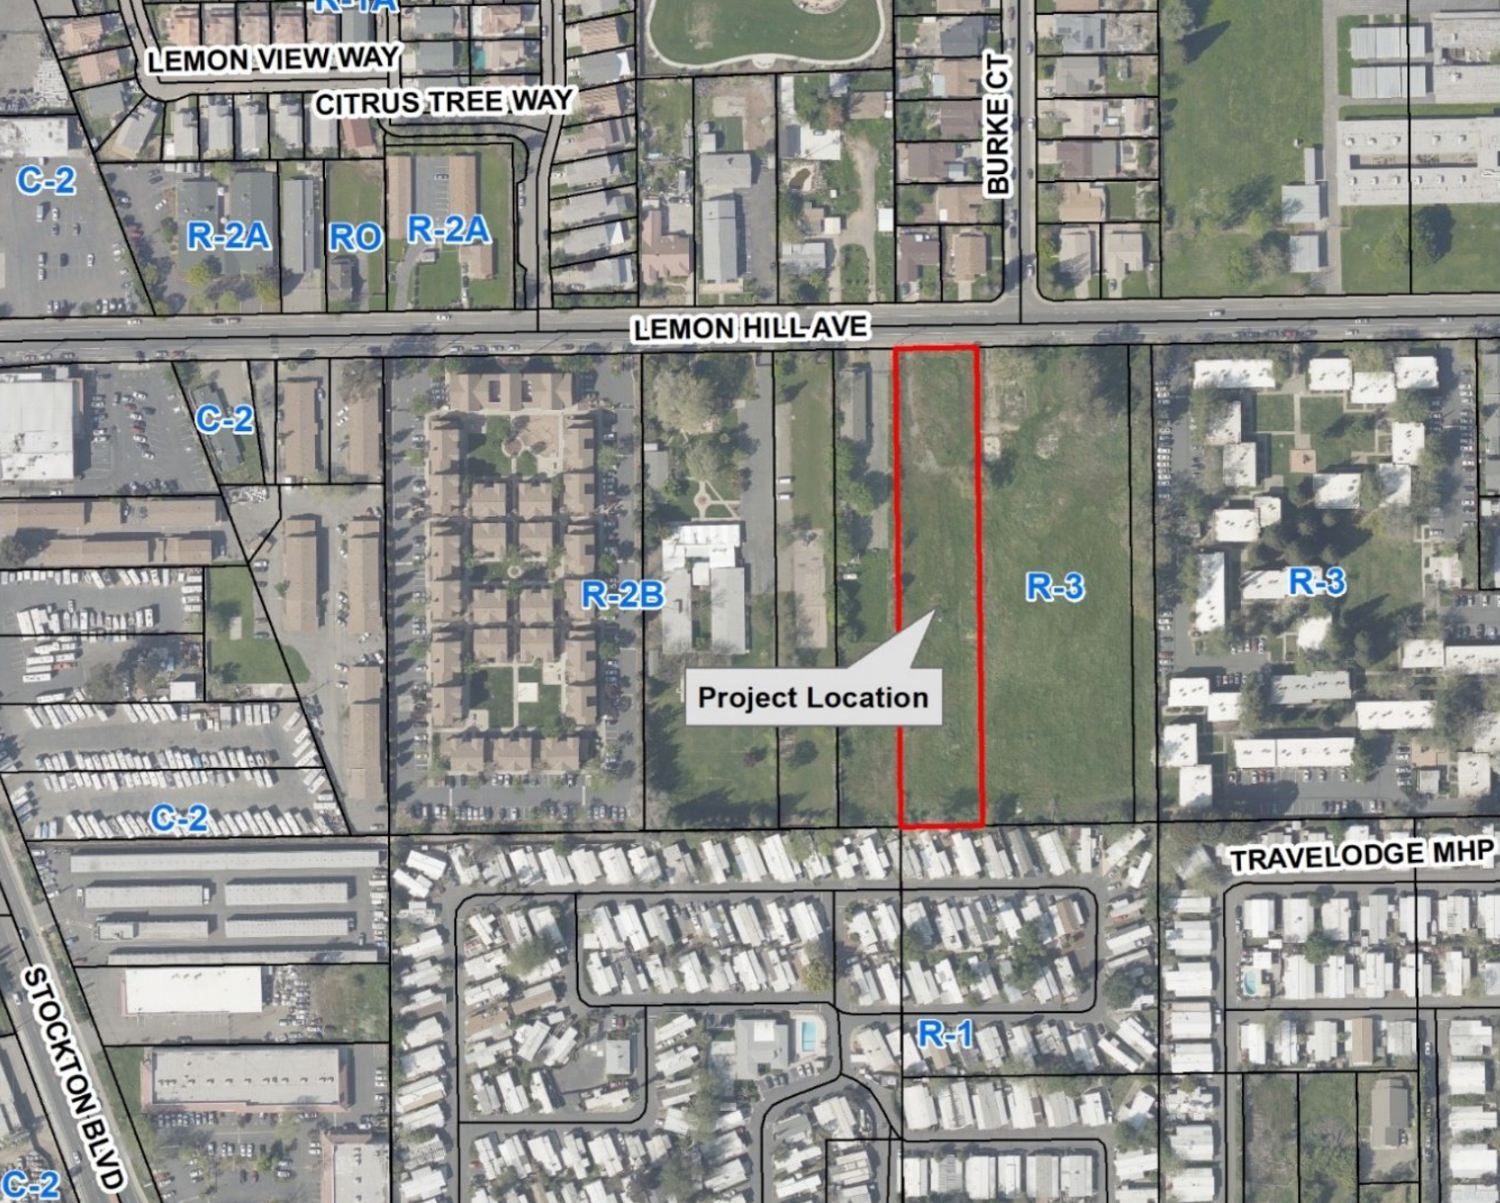 6130 Lemon Hill Avenue property location outlined, image via Sacramento Planning Department